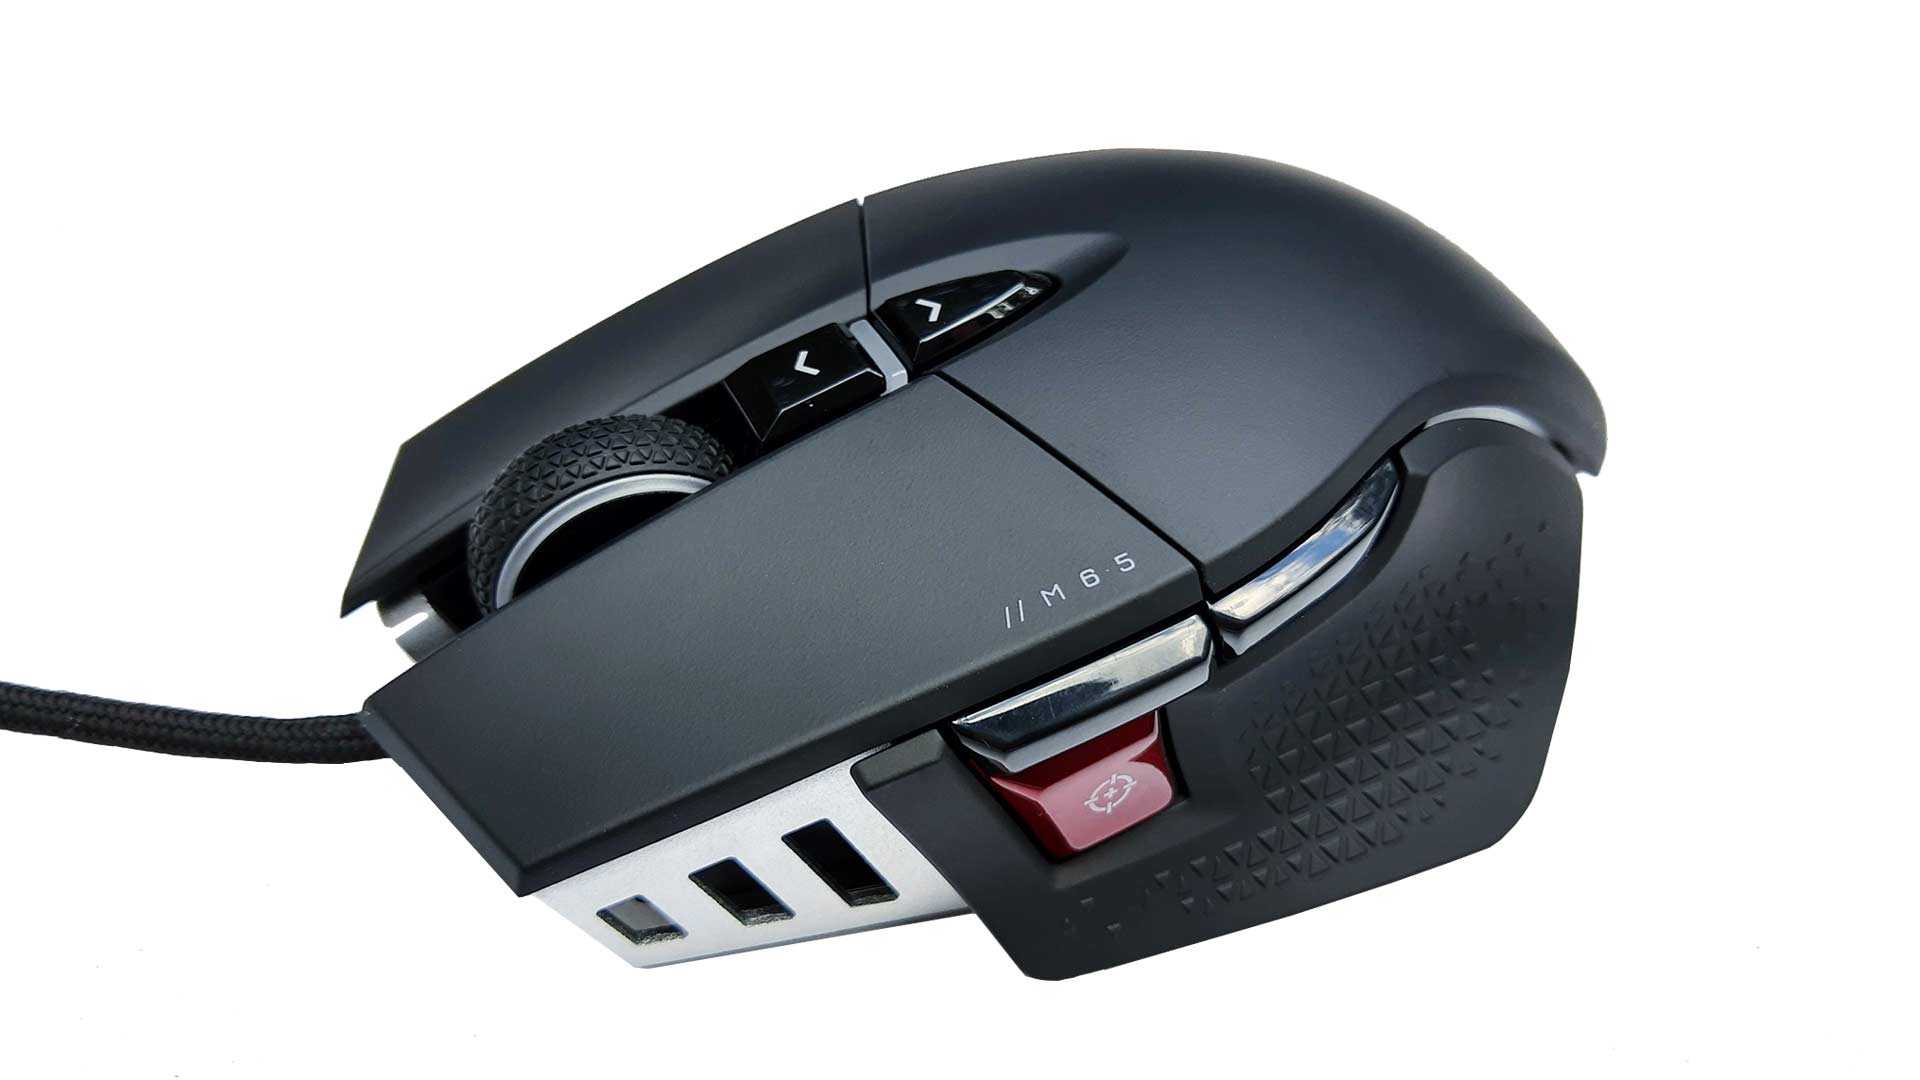 eksistens Rejse Blive skør Corsair M65 Ultra RGB gaming mouse review -- Middleweight champion